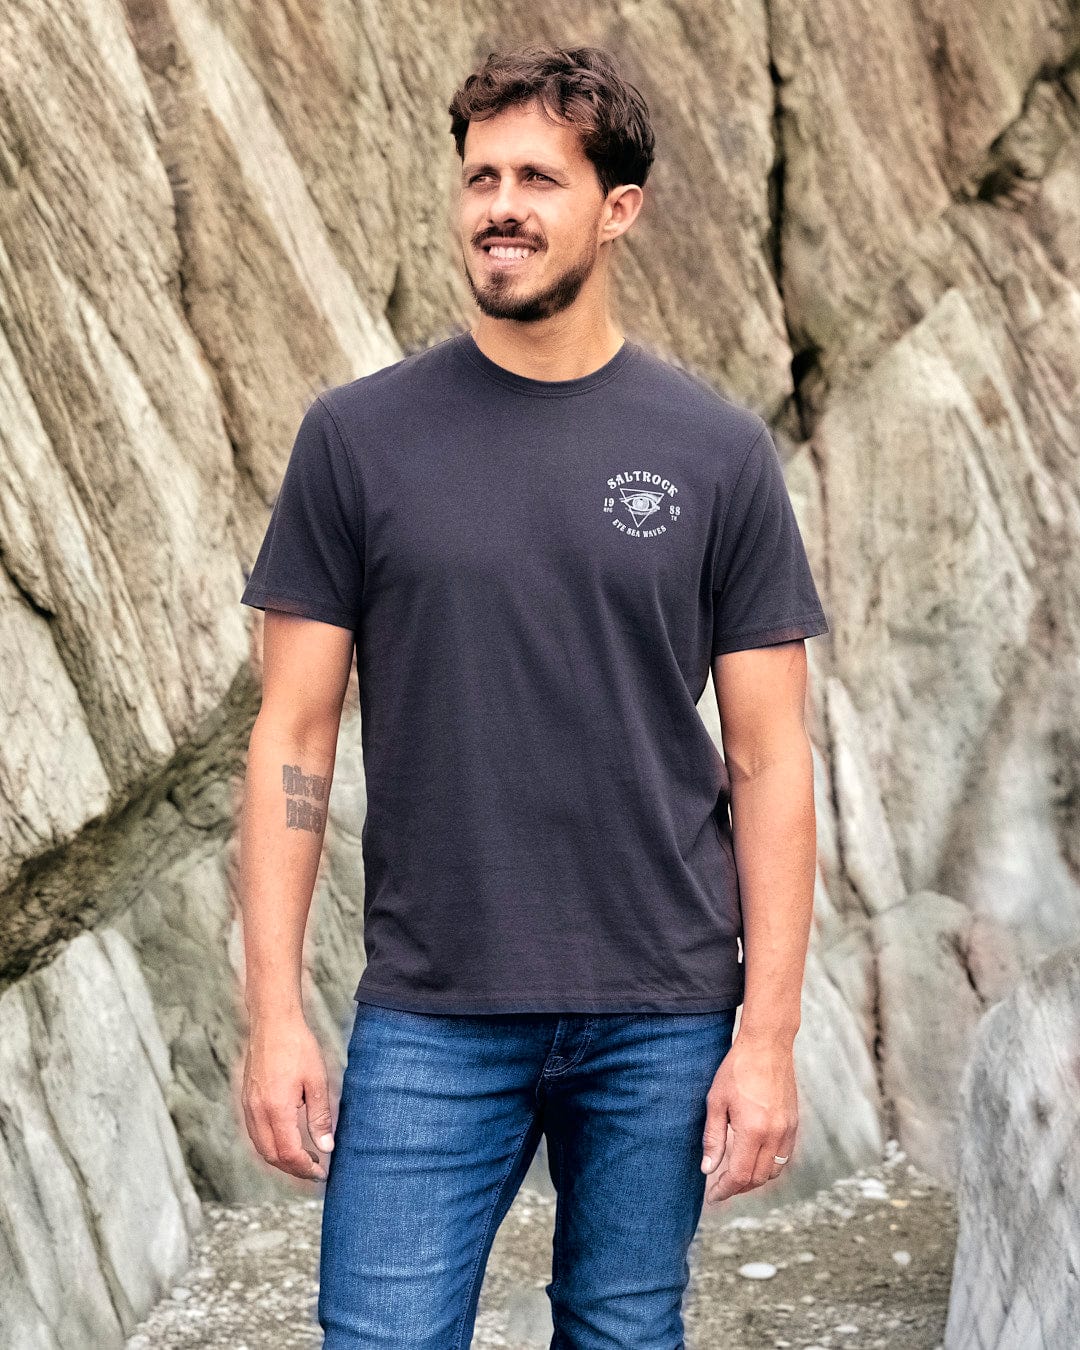 A man wearing a black Eye Sea Waves - Mens Short Sleeve Stonewash T-shirt - Dark Grey and jeans standing next to rocks featuring Saltrock branding.